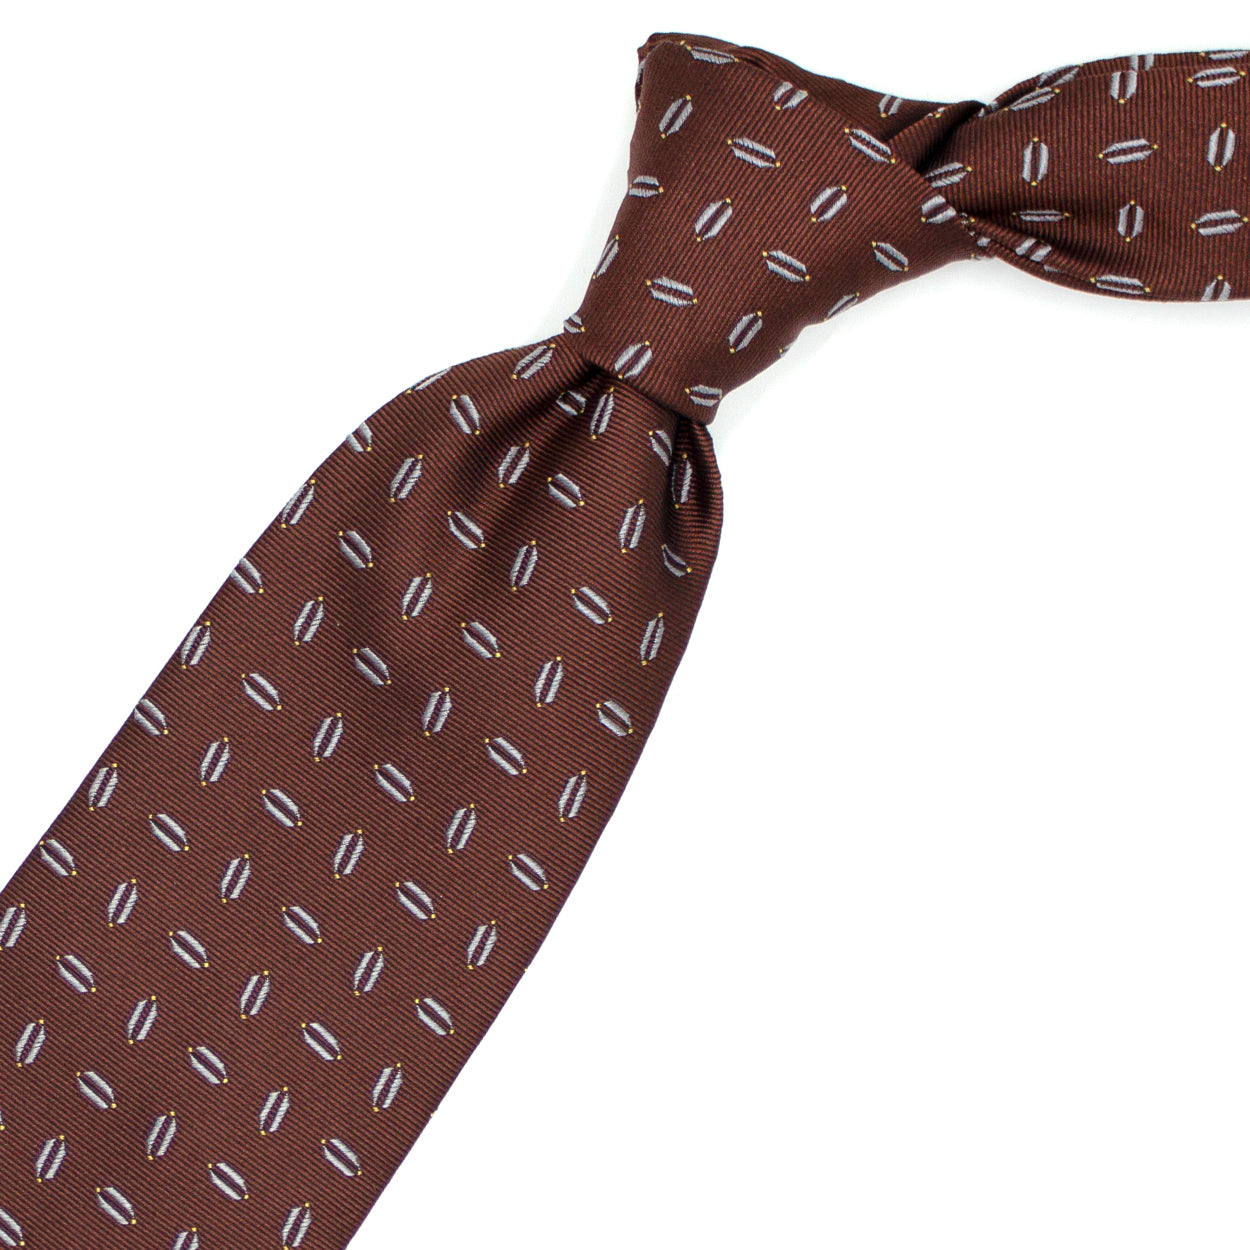 Brown tie with grey geometric pattern